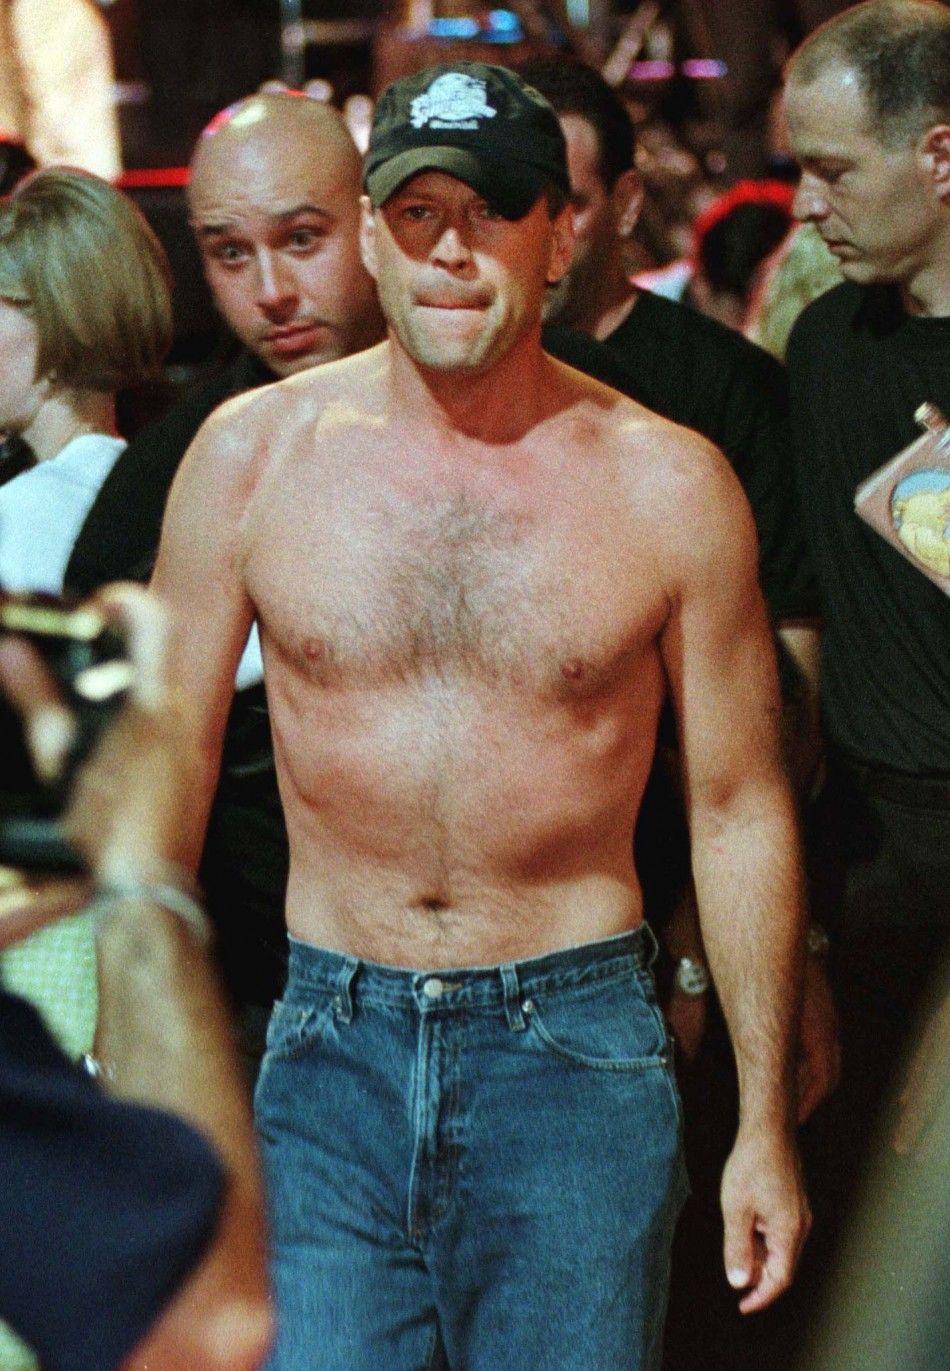 Bruce Willis Birthday Actor Is 57 With Die Hard Good Looks [PHOTOS